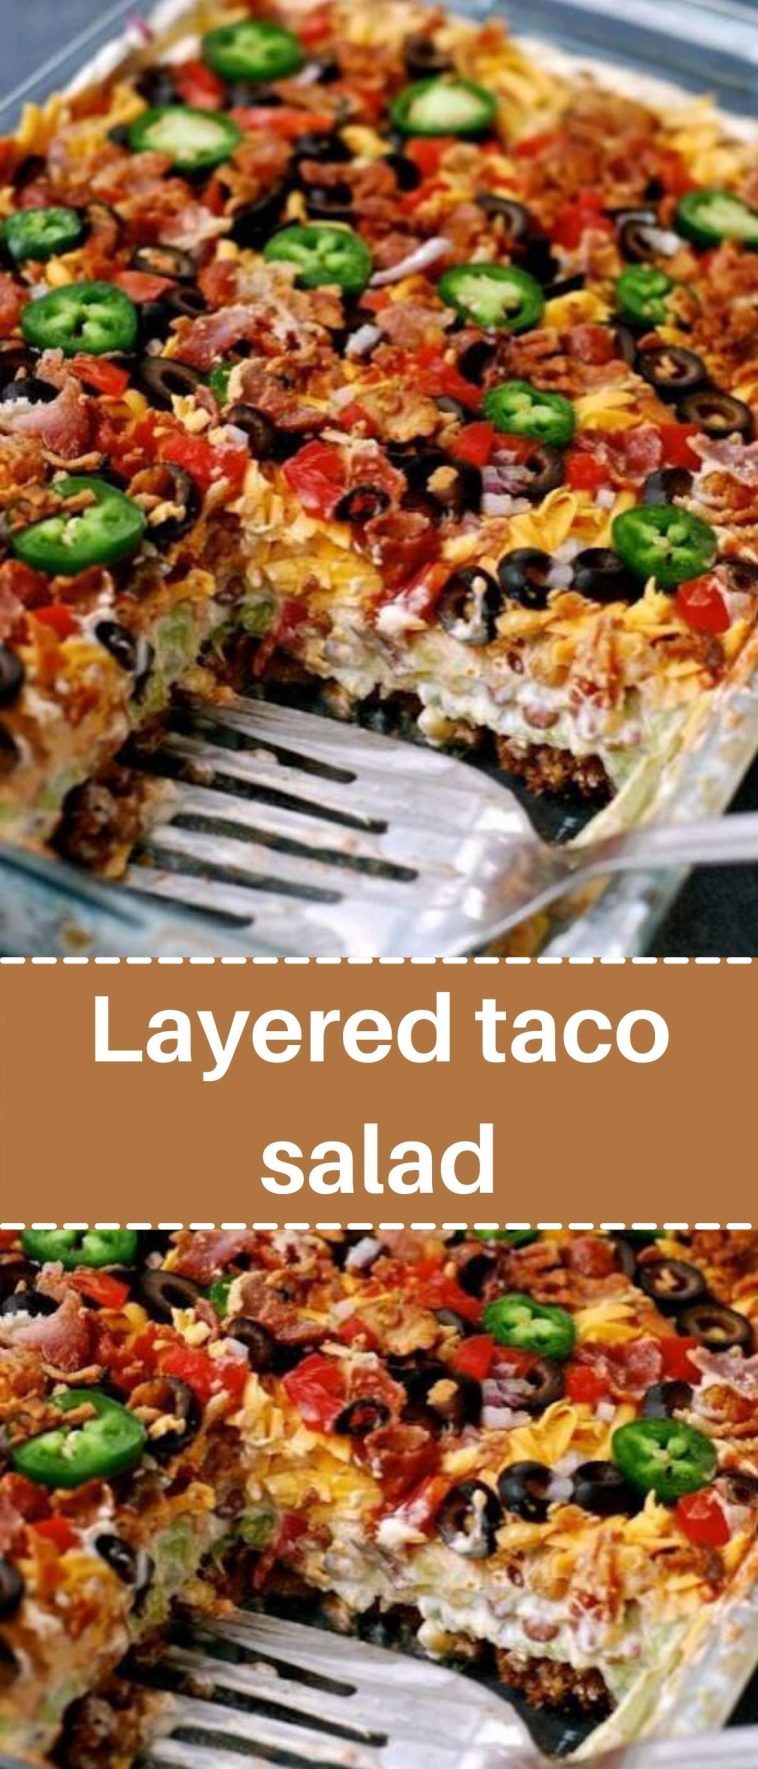 Layered taco salad